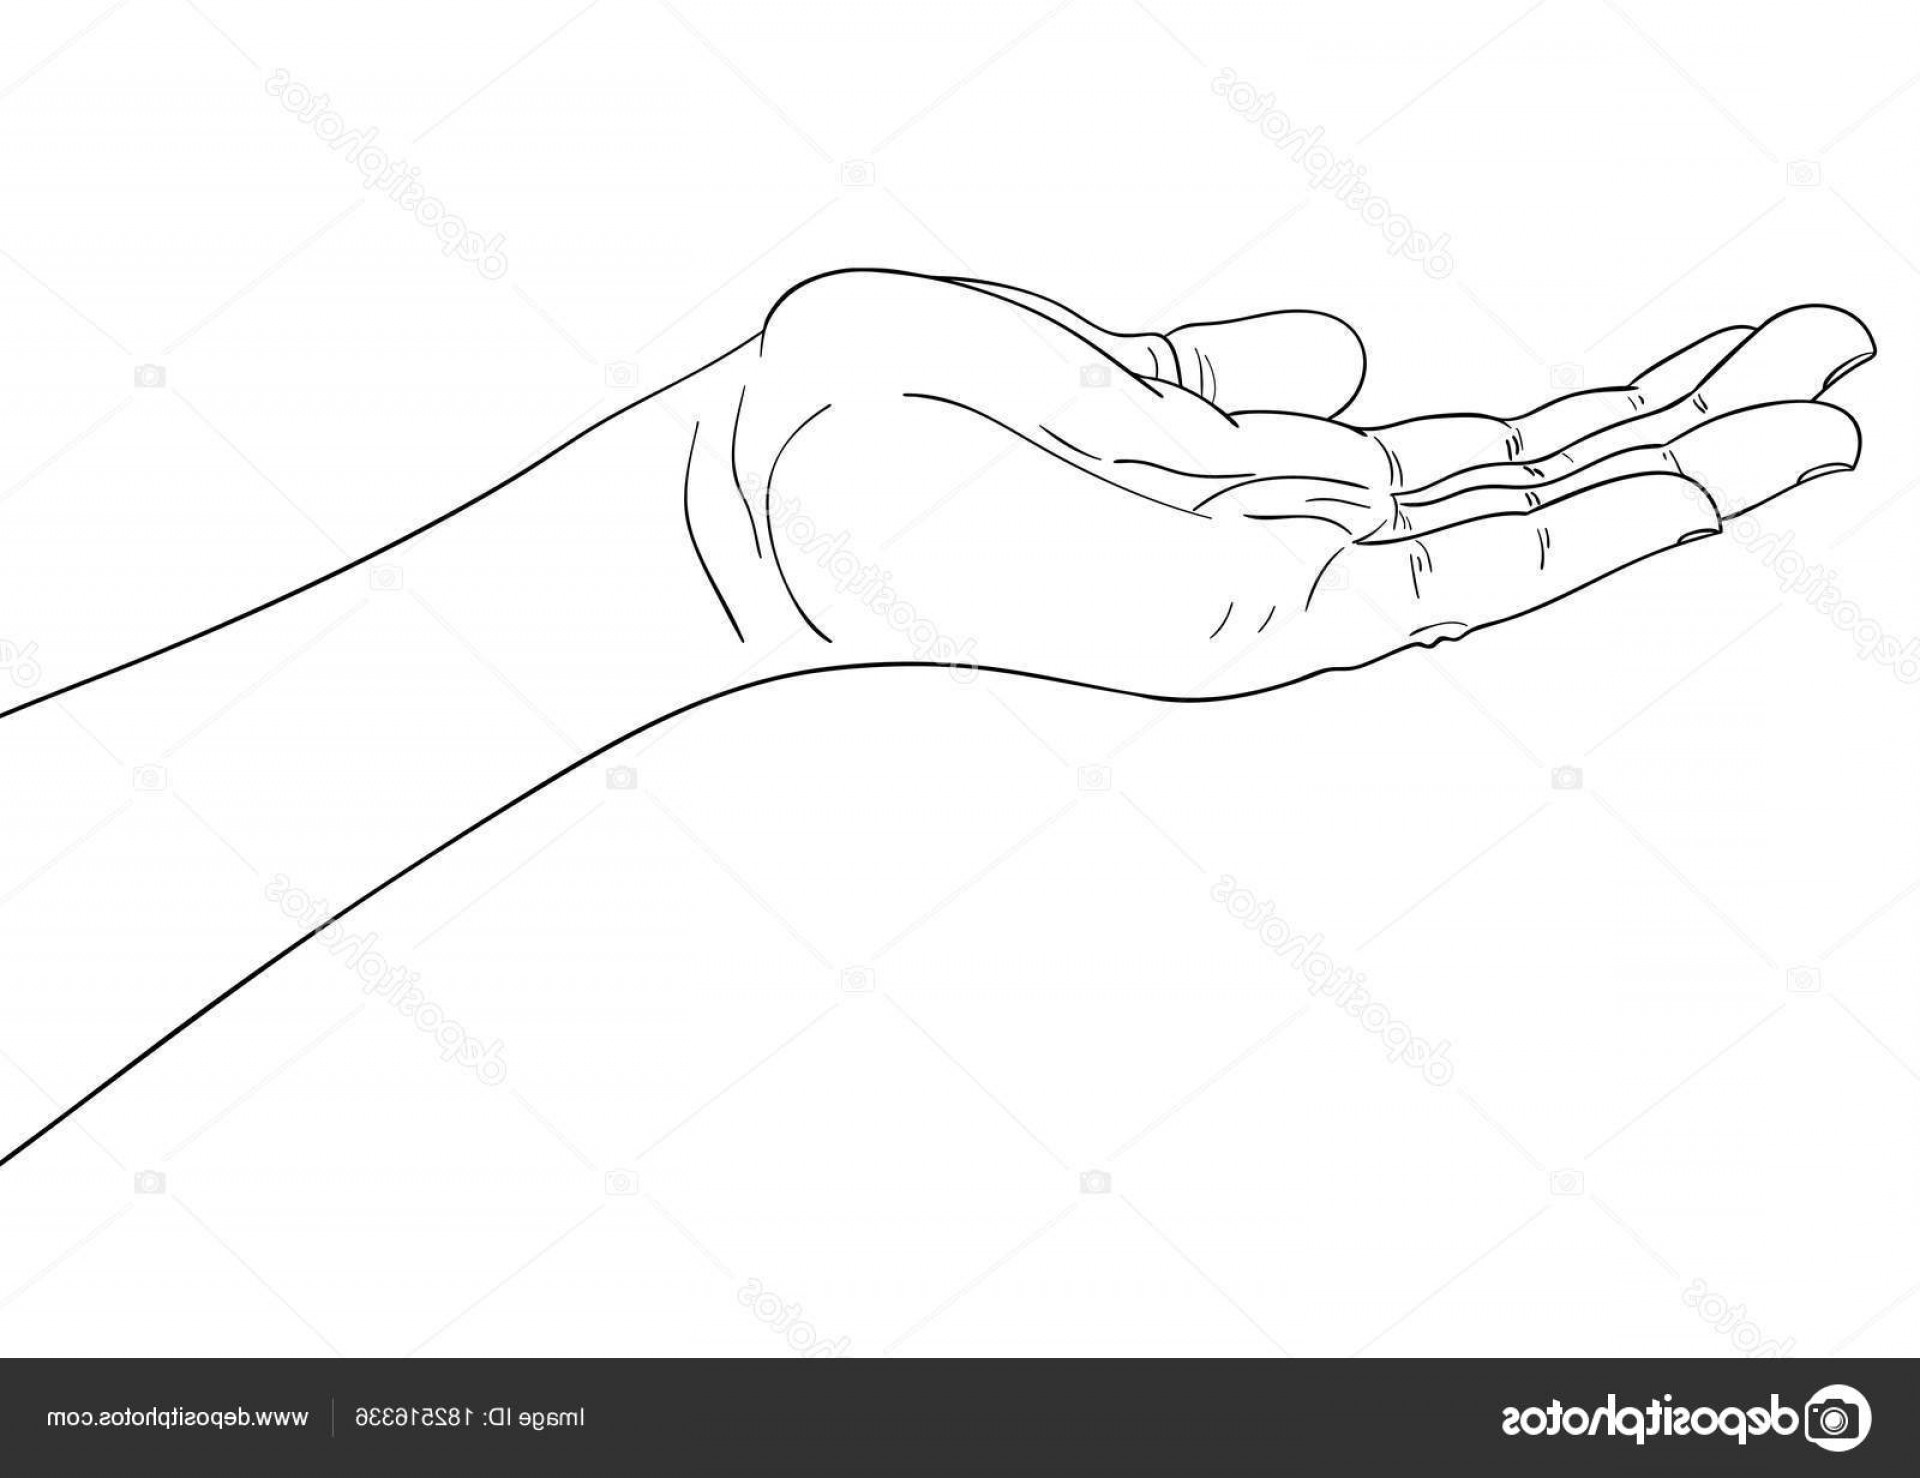 Нарисованная протянутая рука